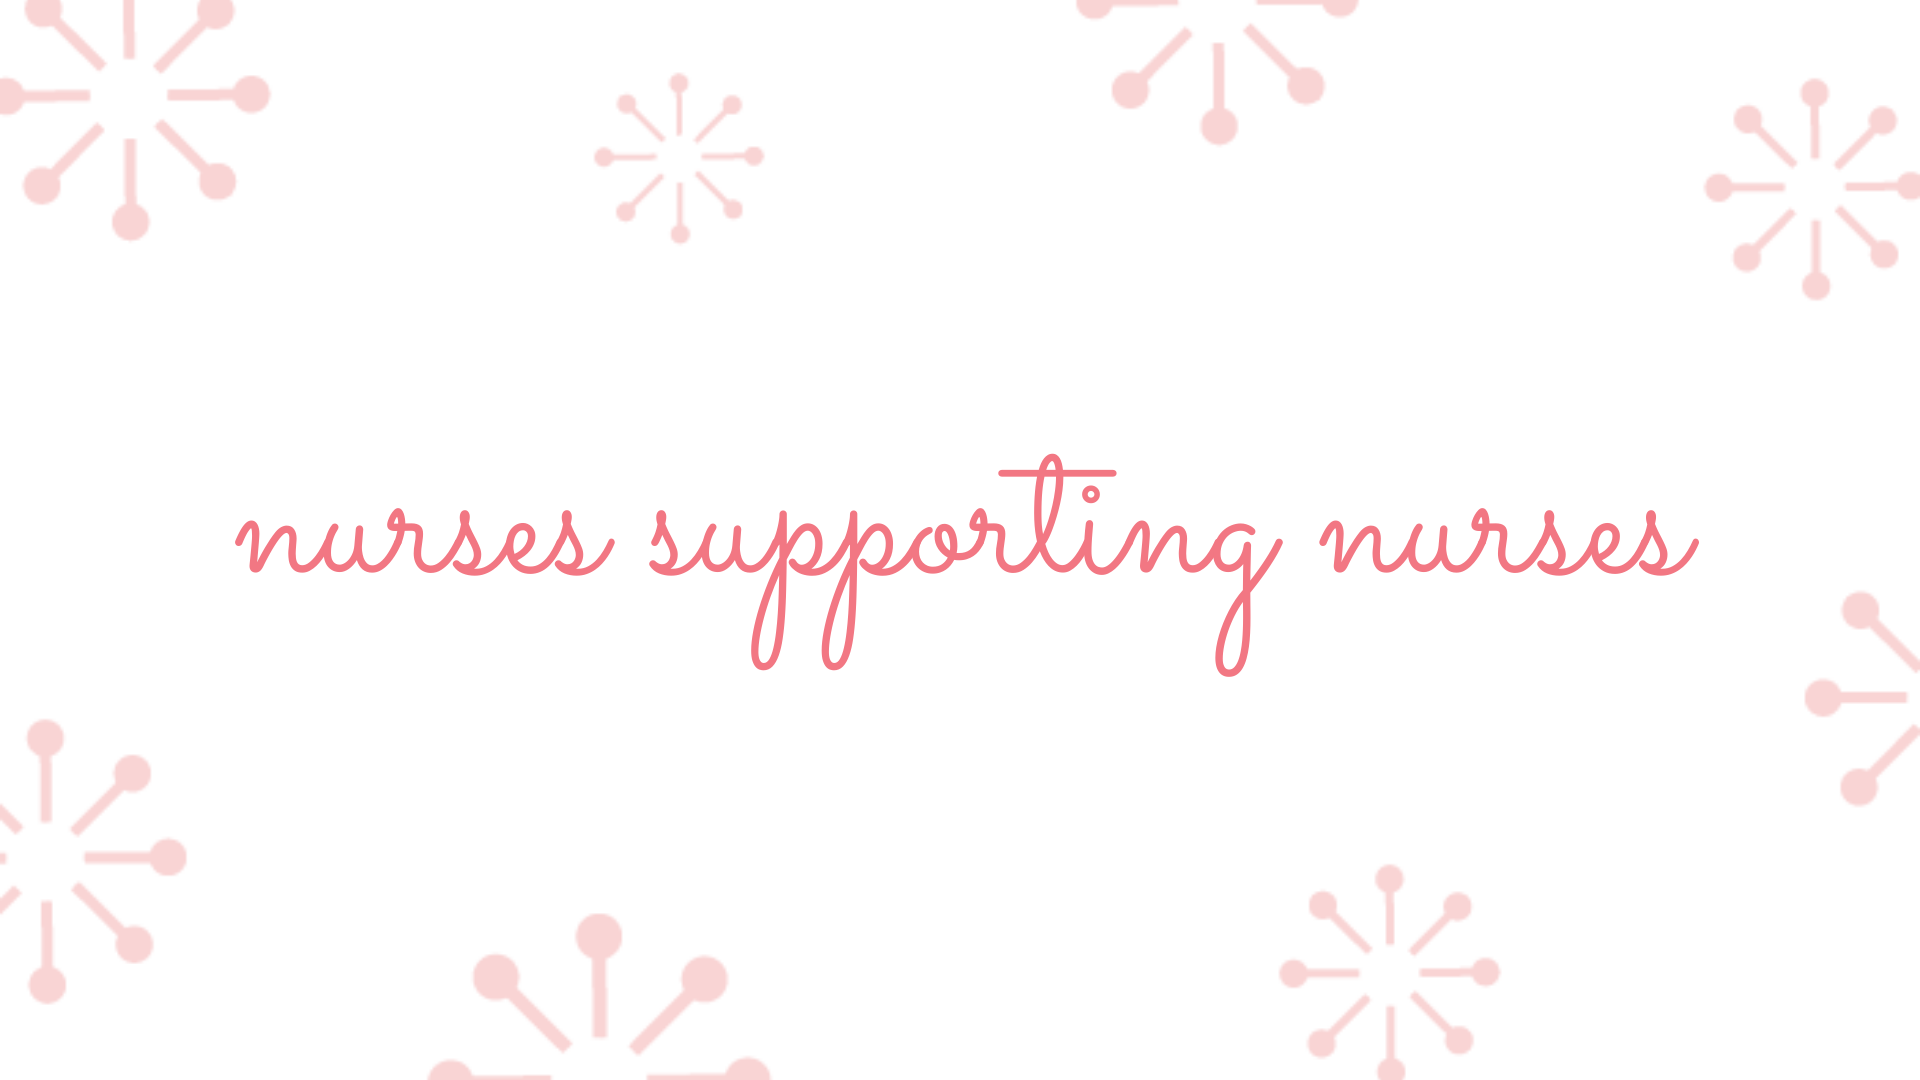 nurses supporting nurses nurseregistry